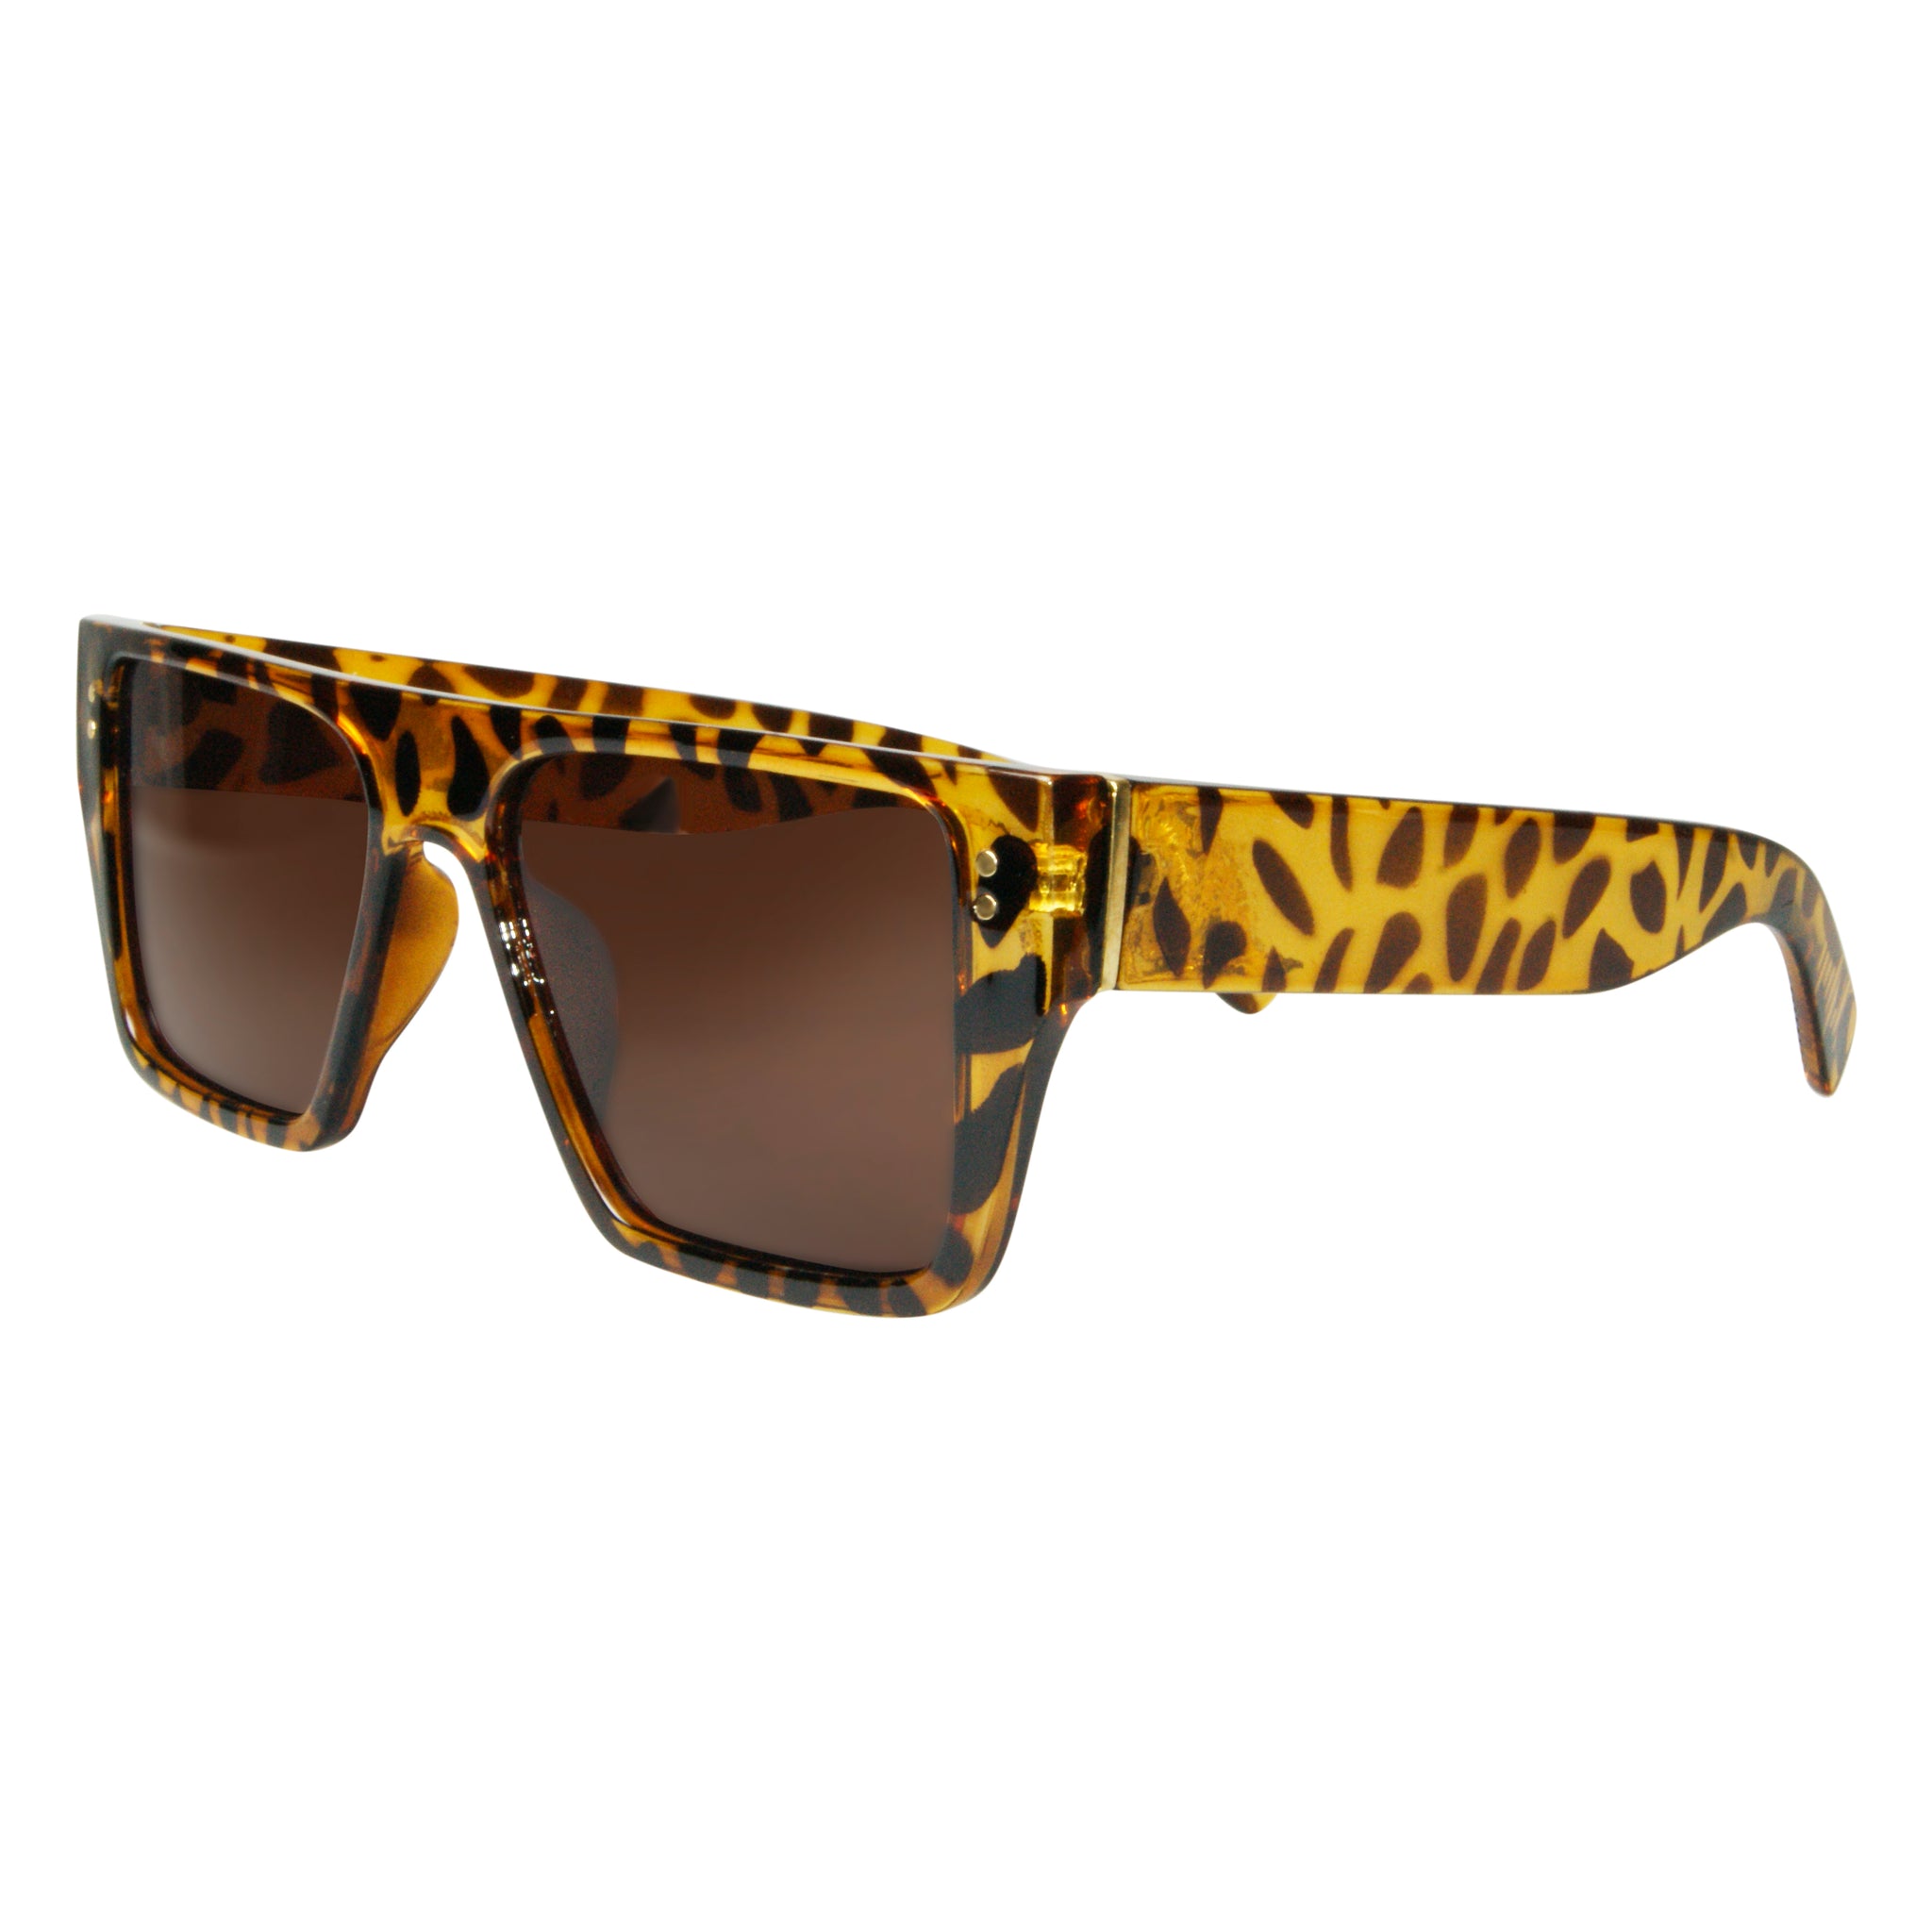 Lazzaro Sunglasses - free with coupon!